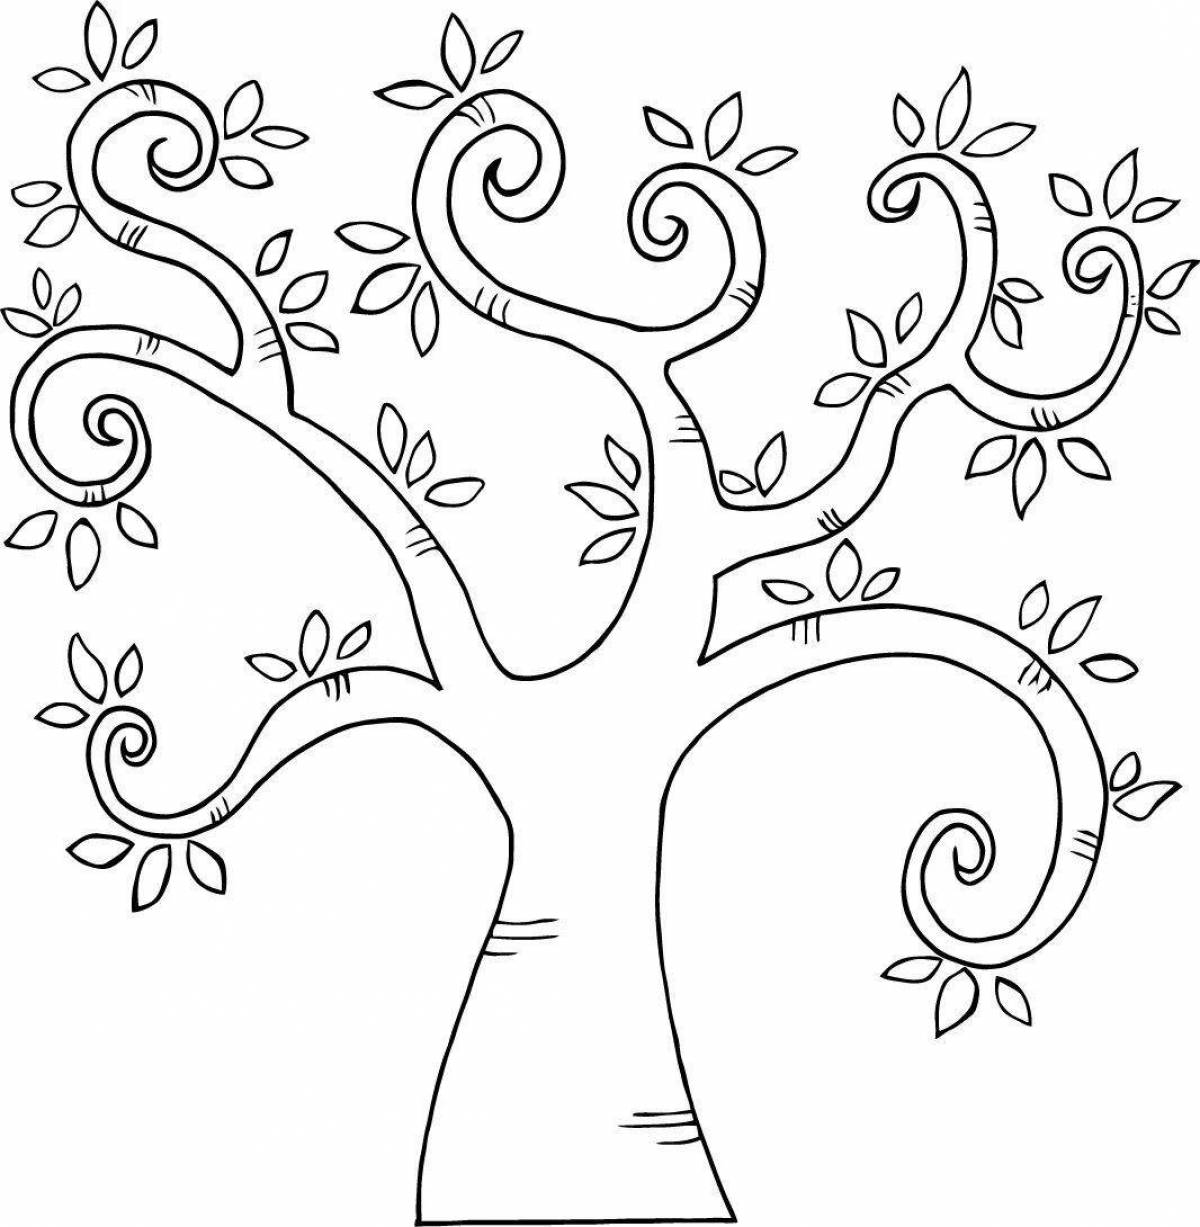 Coloring page joyful miracle tree